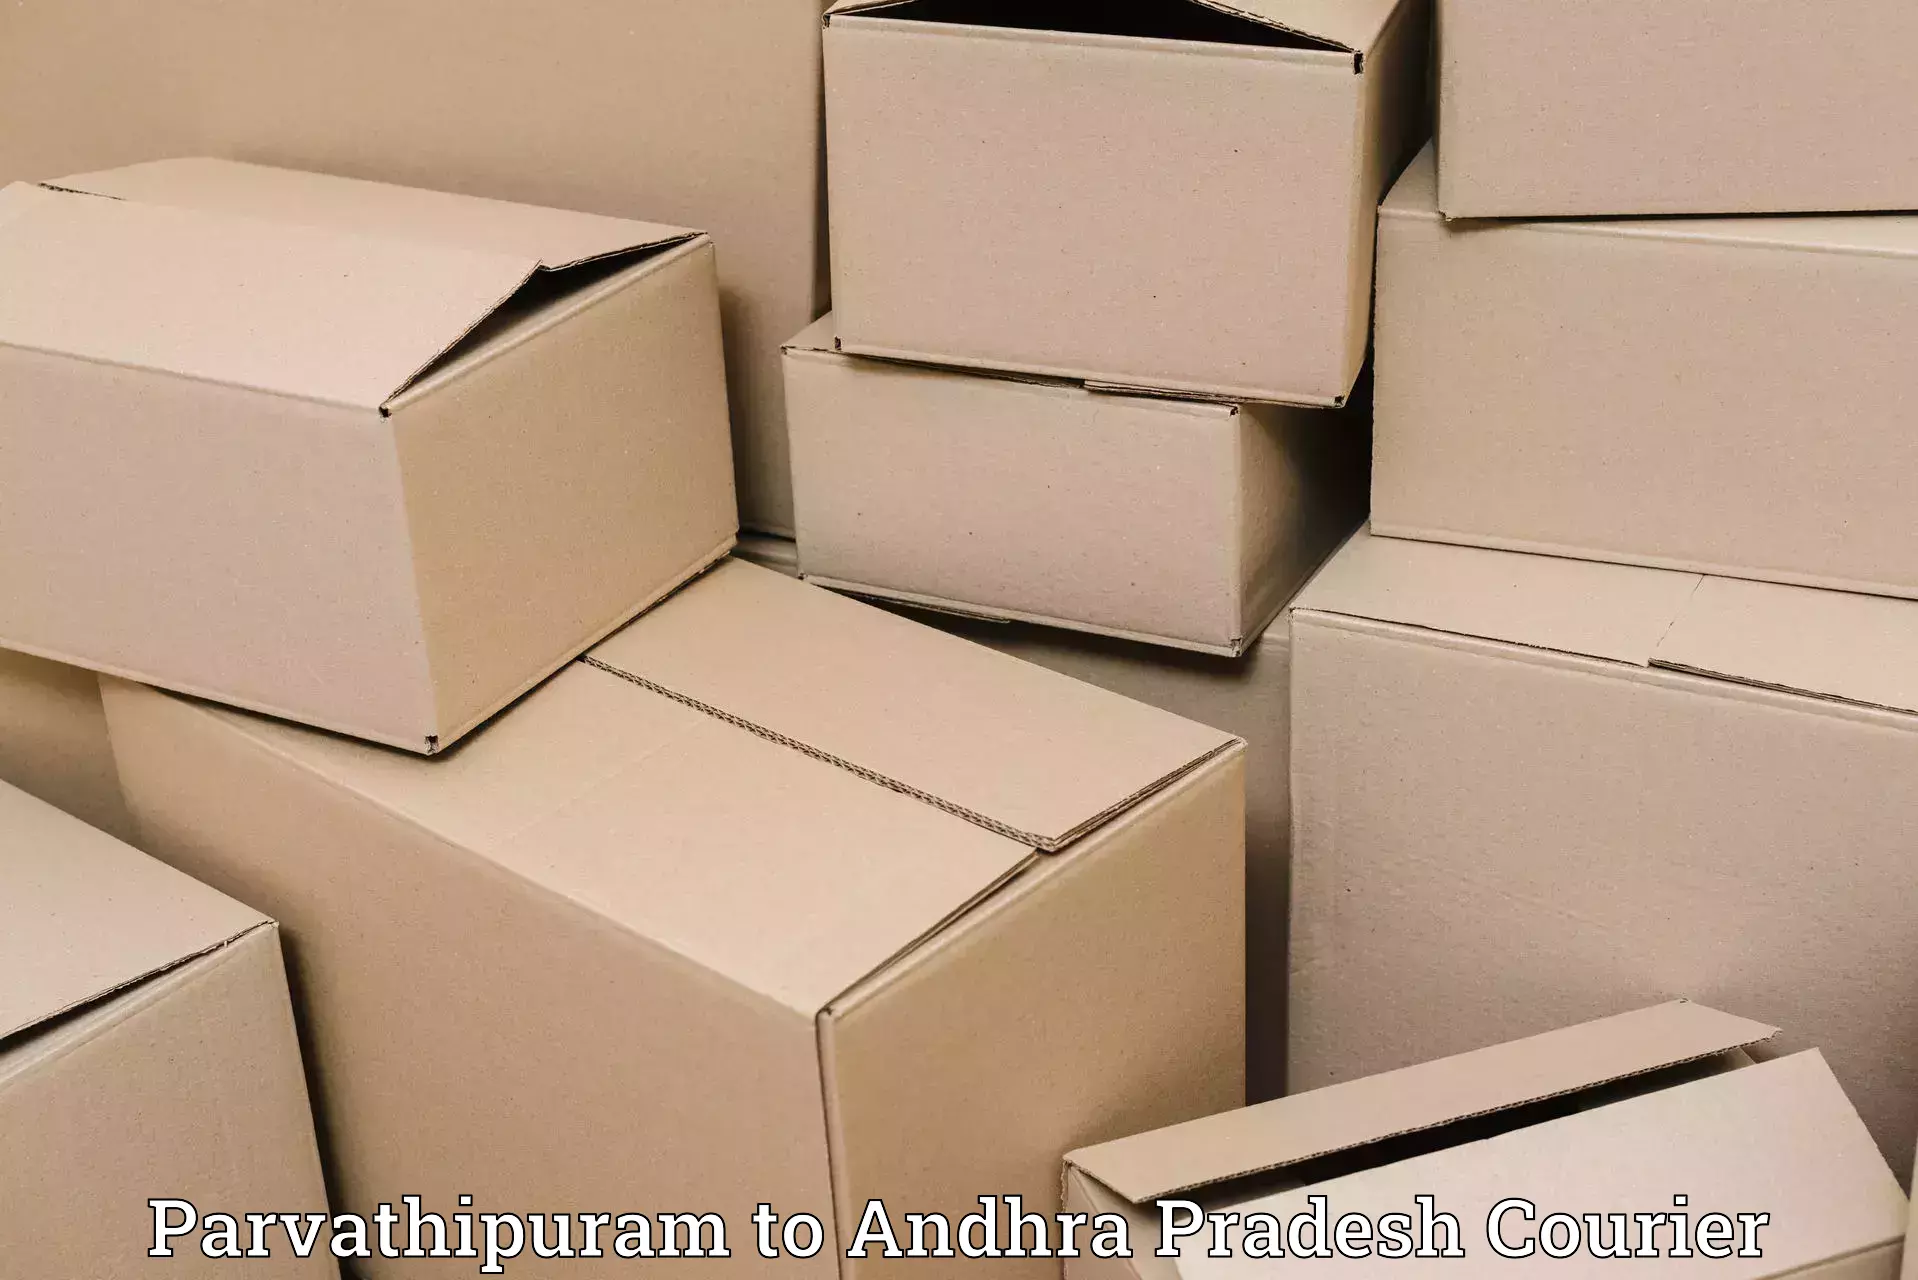 Global logistics network Parvathipuram to Addanki